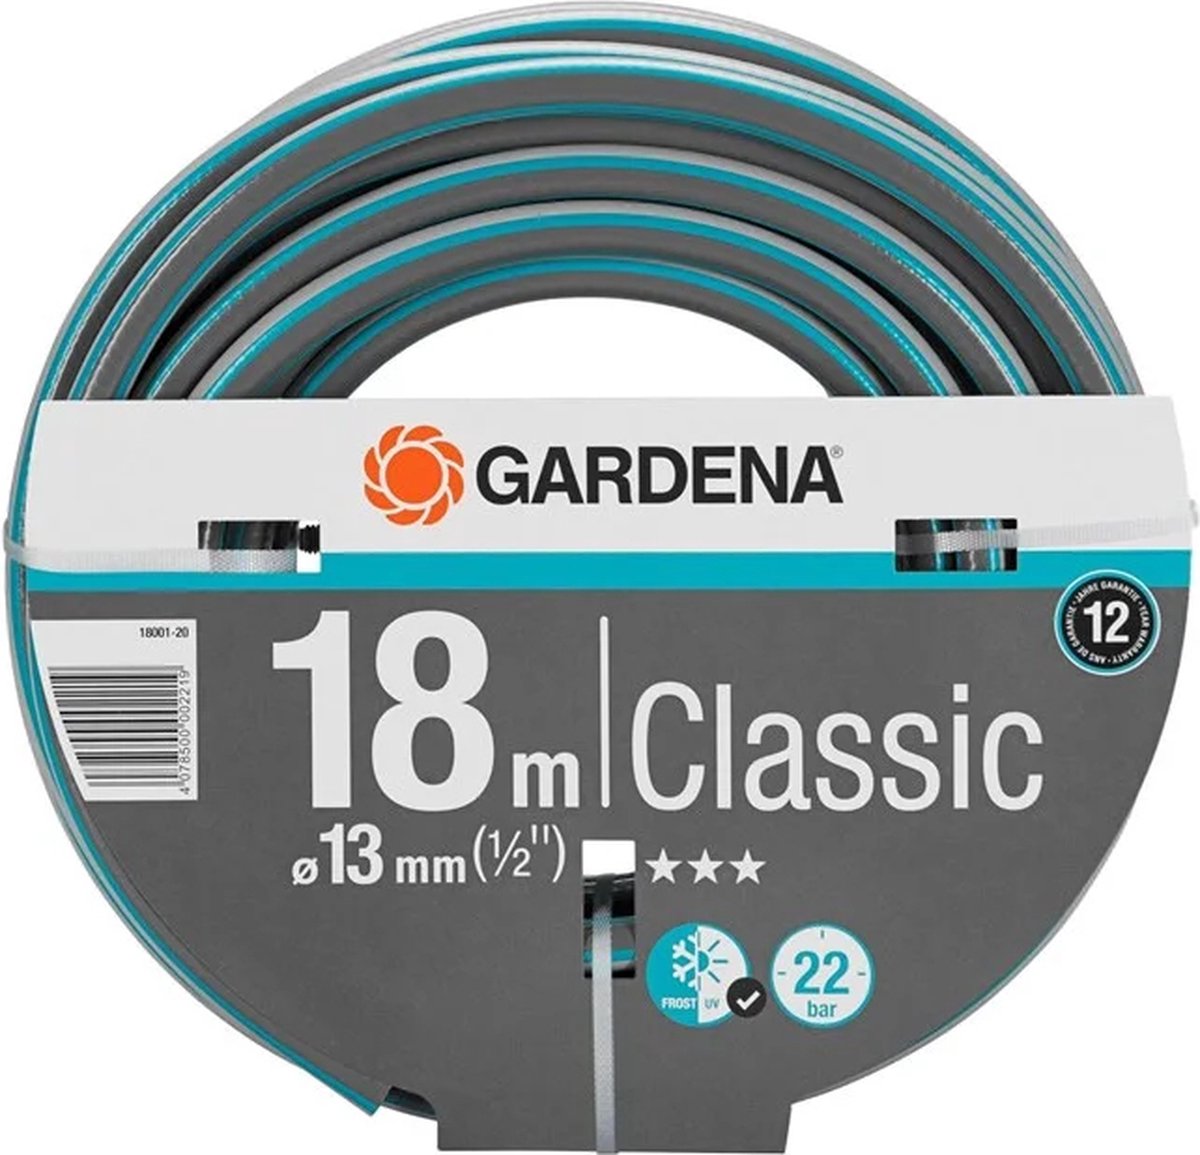 Tuinslang - Gardena Classic slang 13mm 1/2 18 m